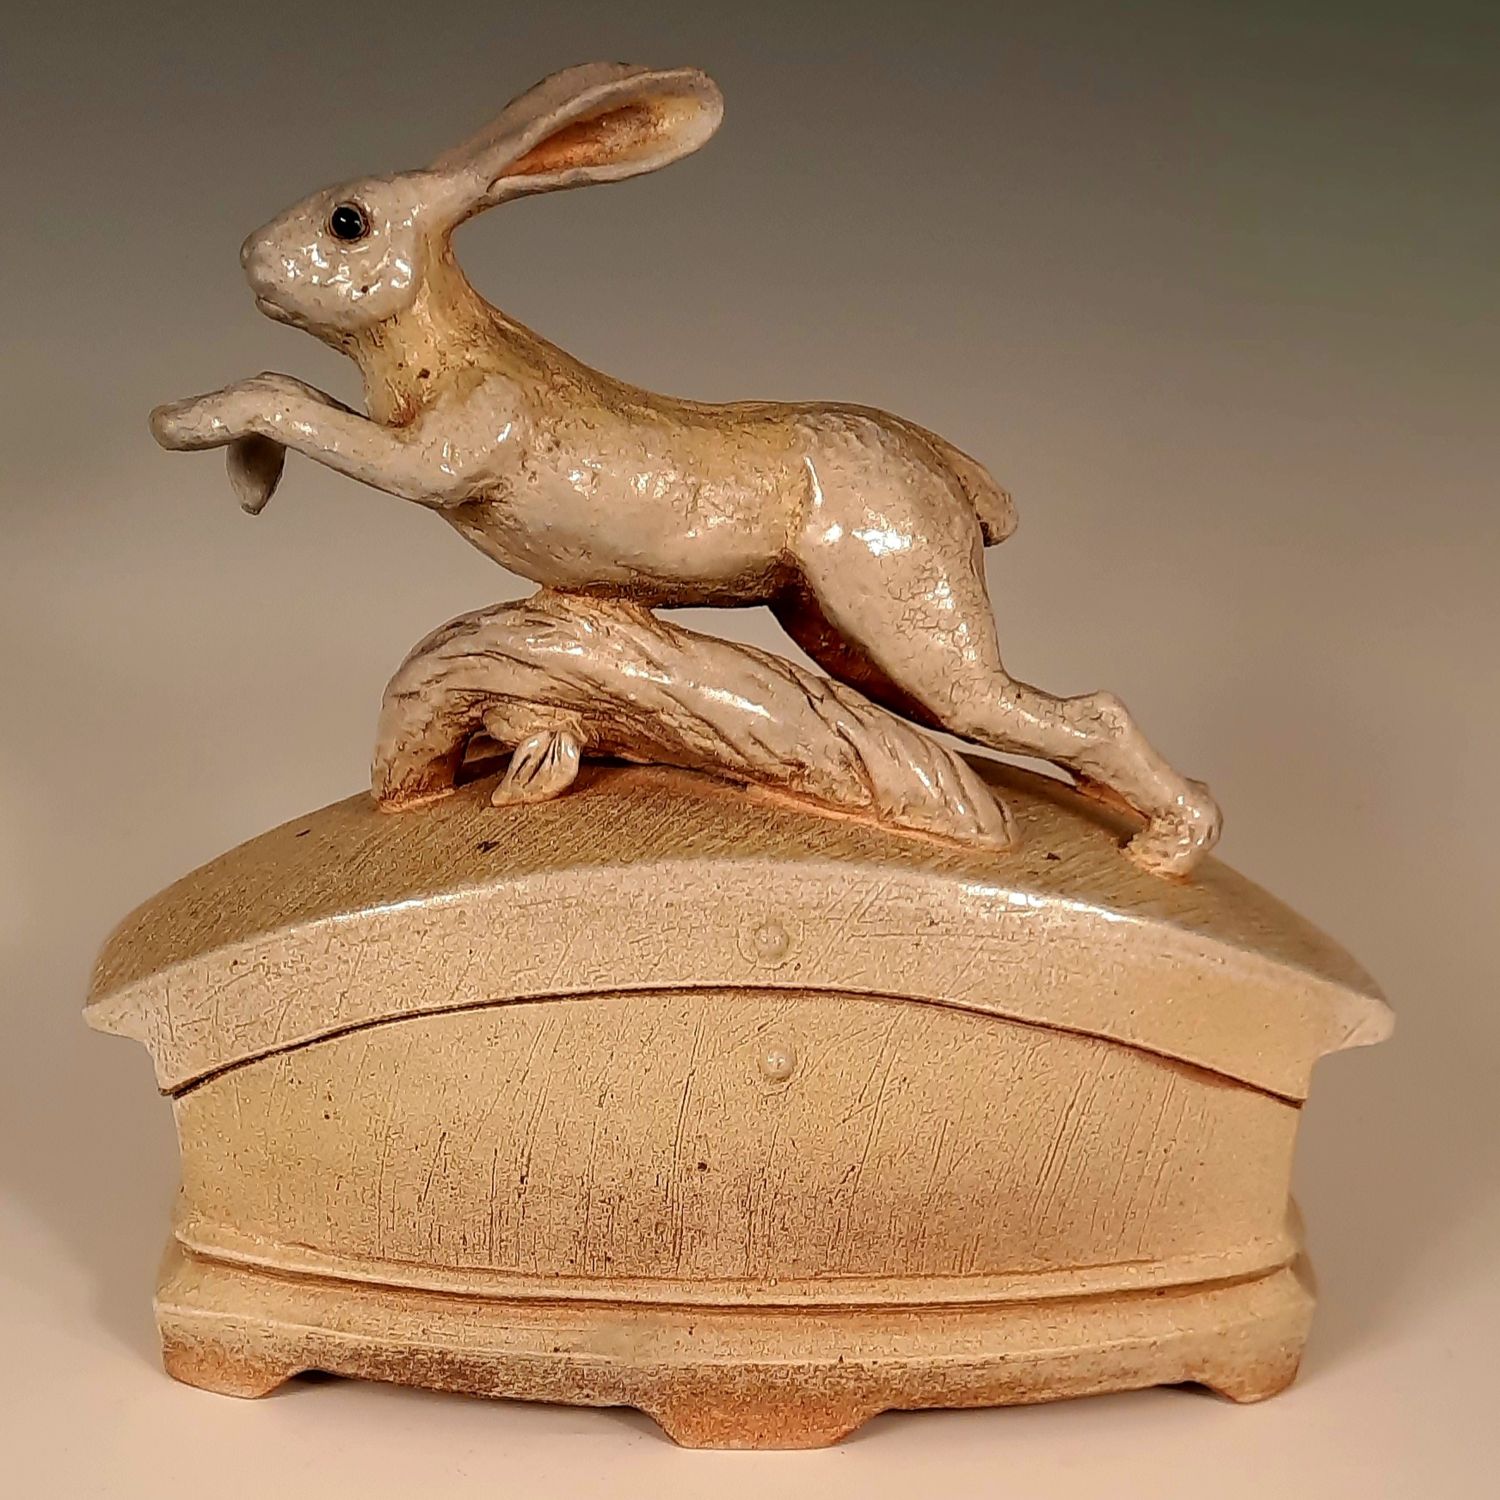 Bruce Cochrane & Zsuzsa Monostory: Lidded box – Leaping rabbit Product Image 1 of 1